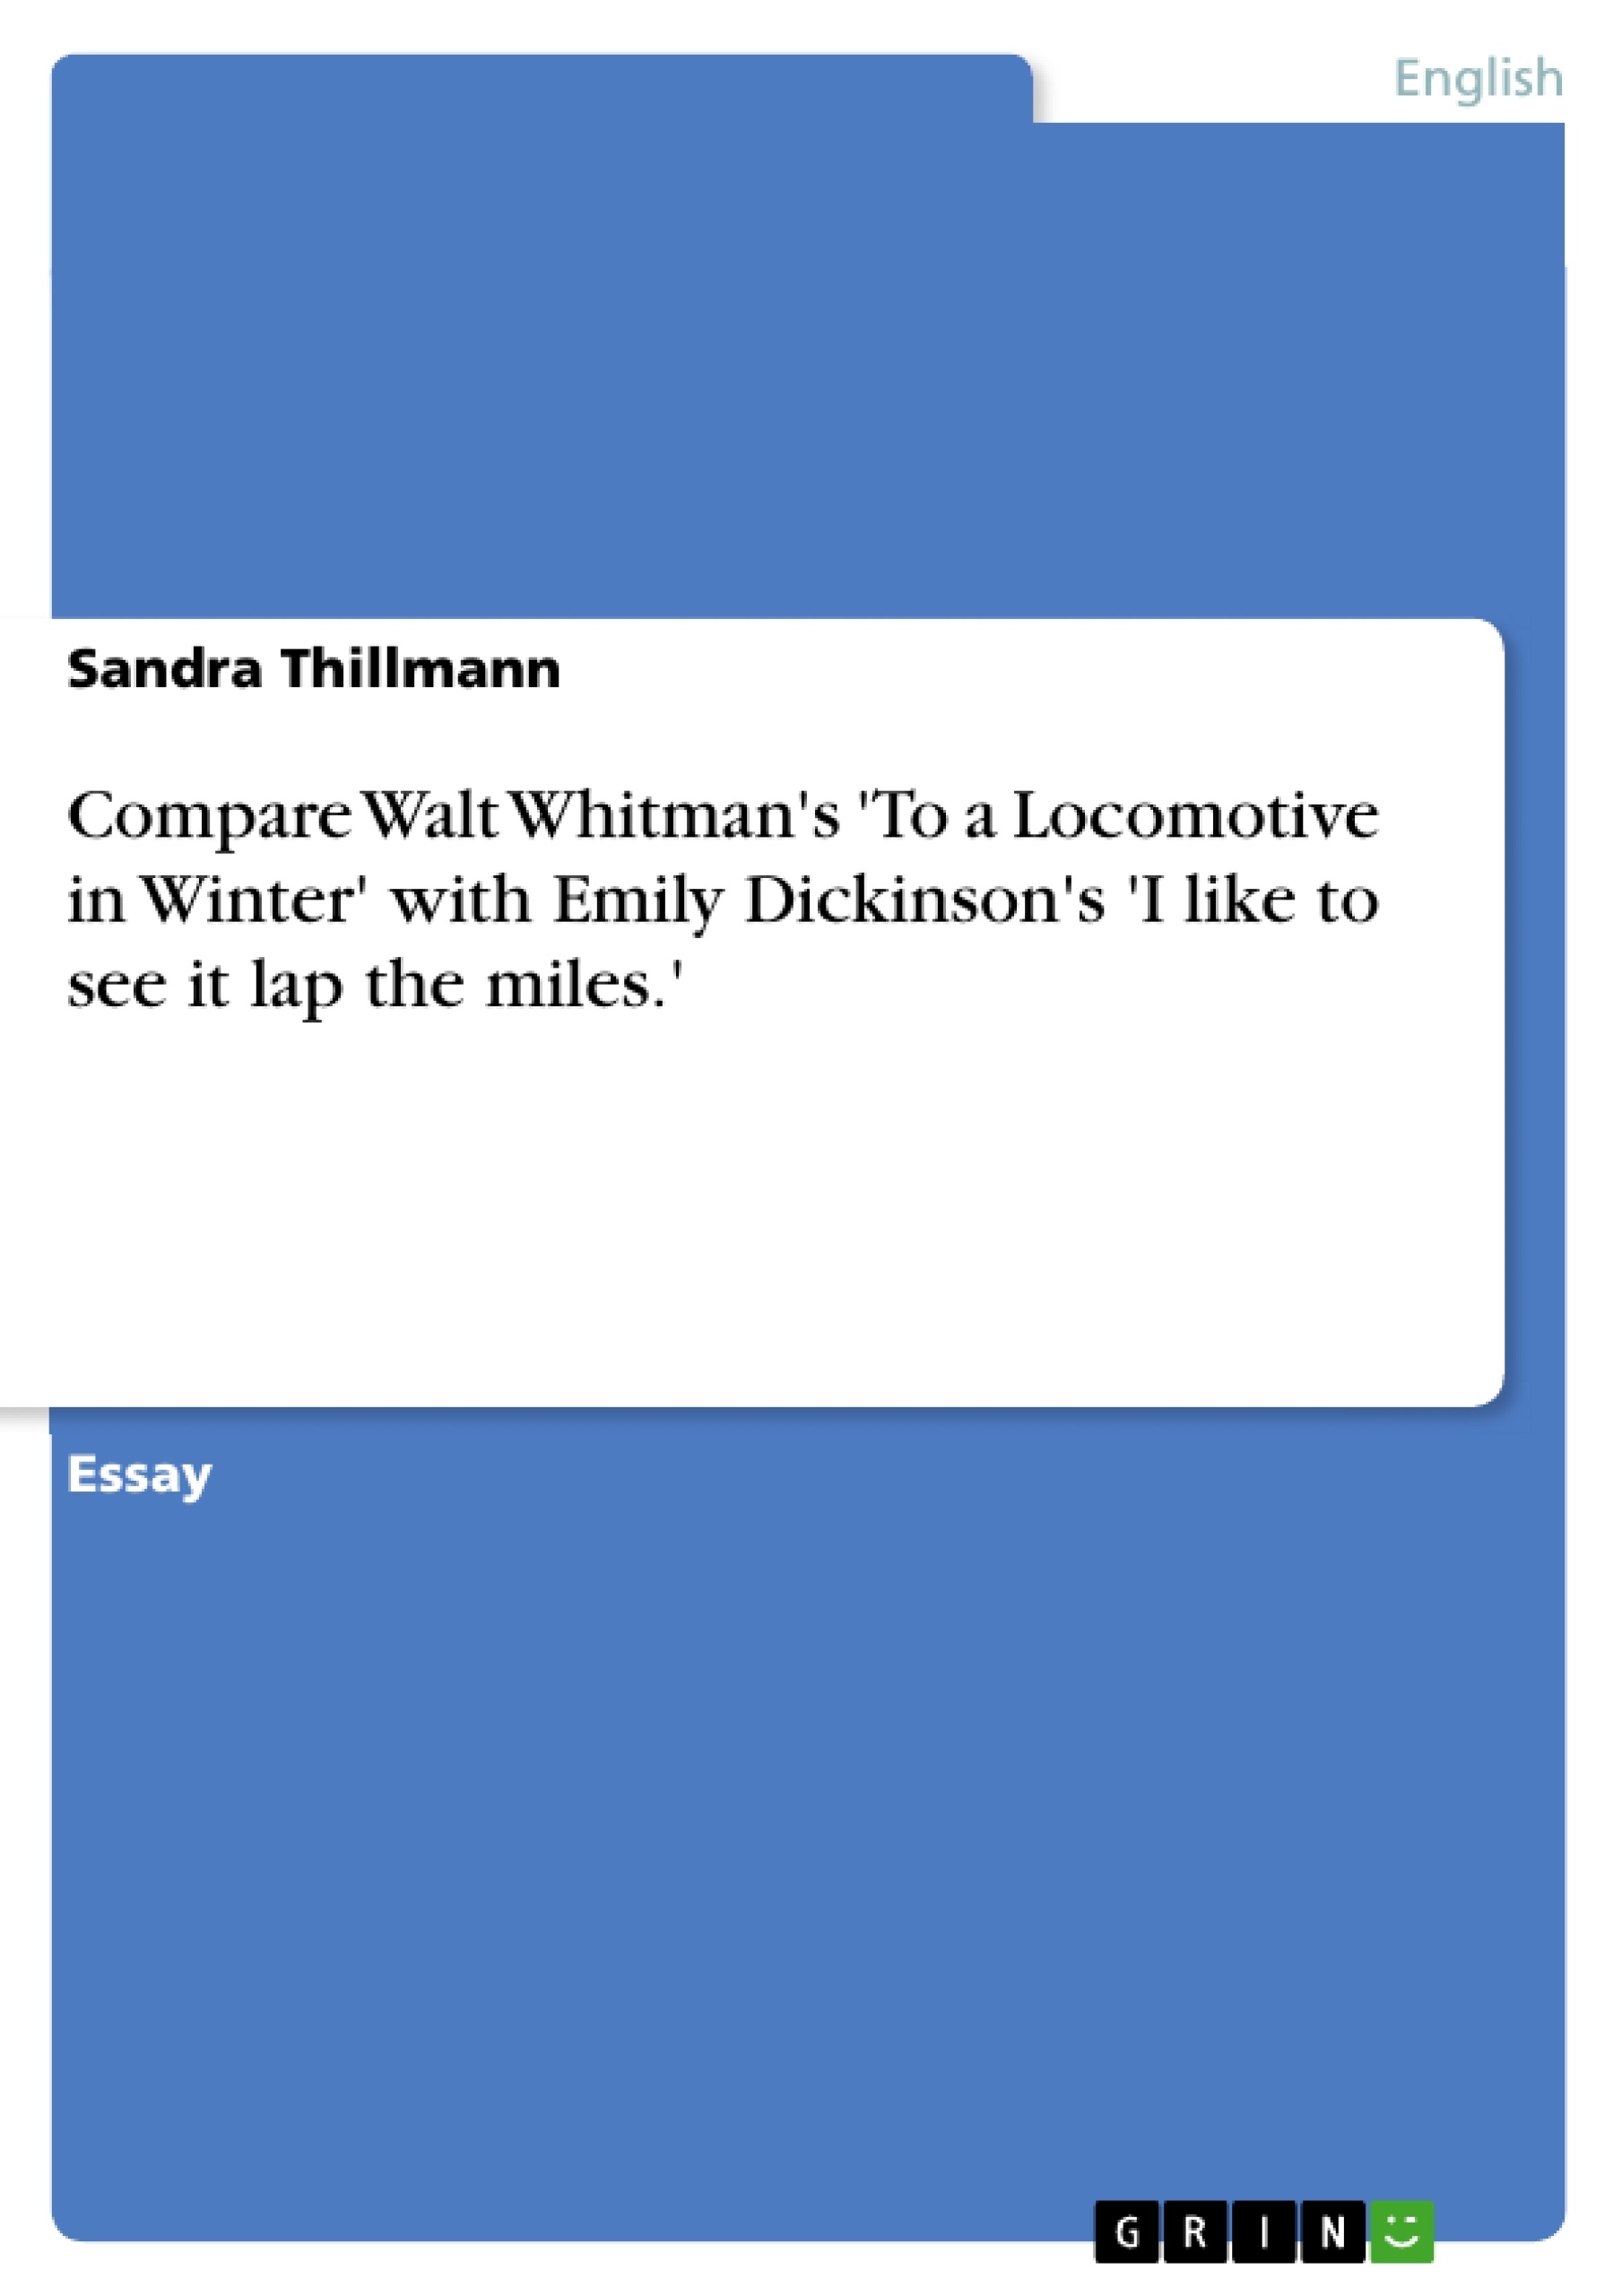 Emily dickinson term paper